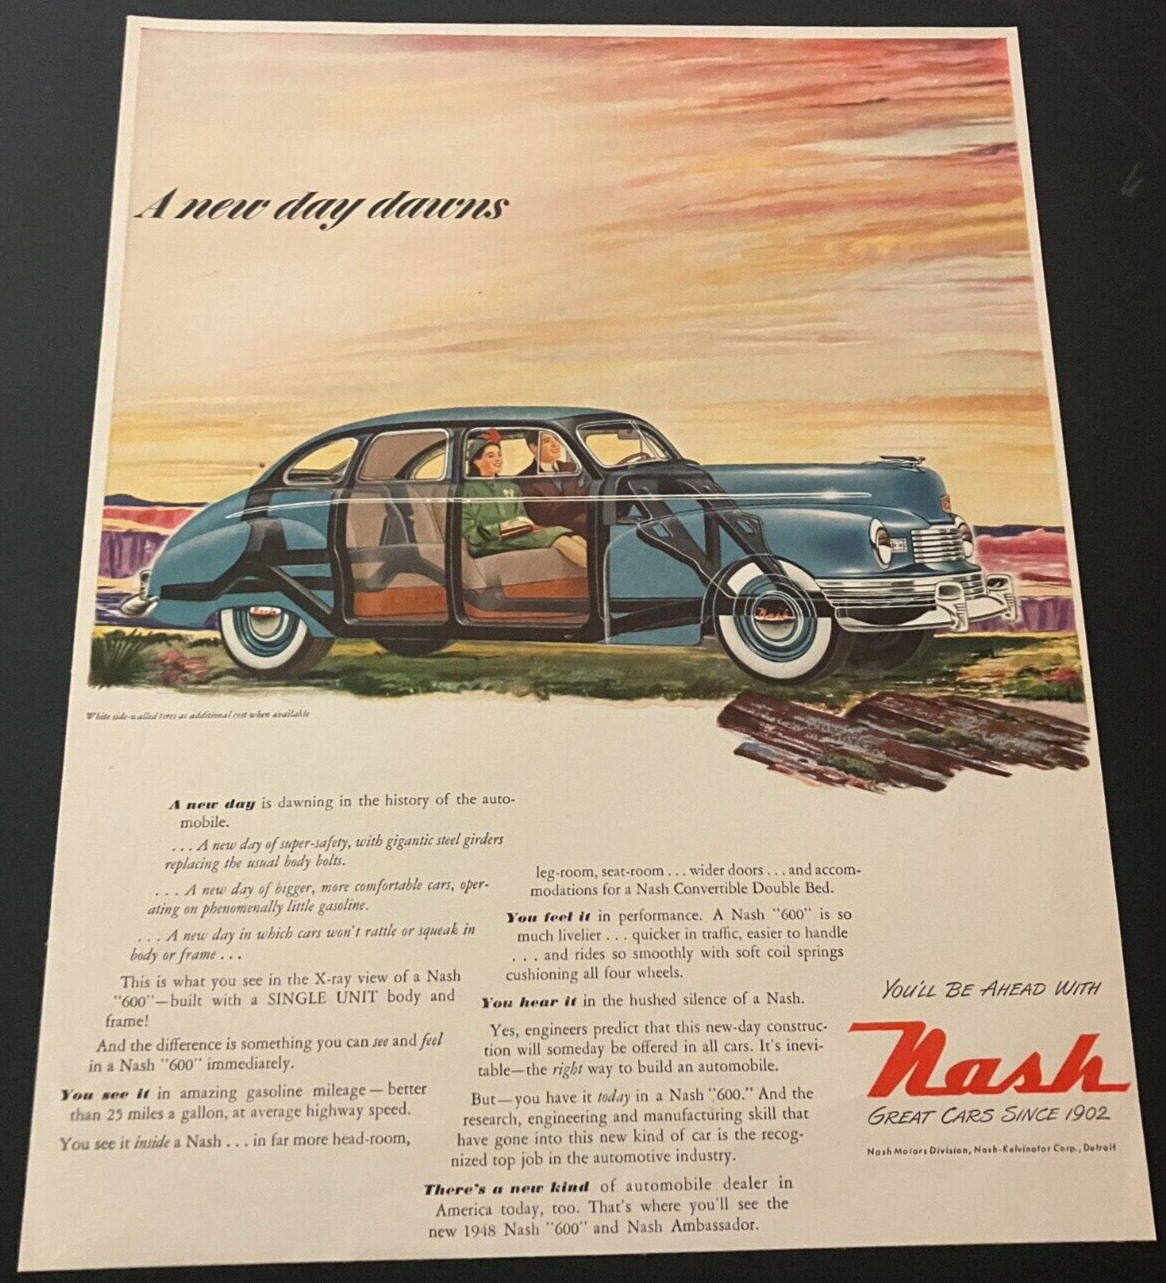 Blue 1948 Nash 600 at Sunrise - Vintage Original Holiday Print Ad / Wall Art